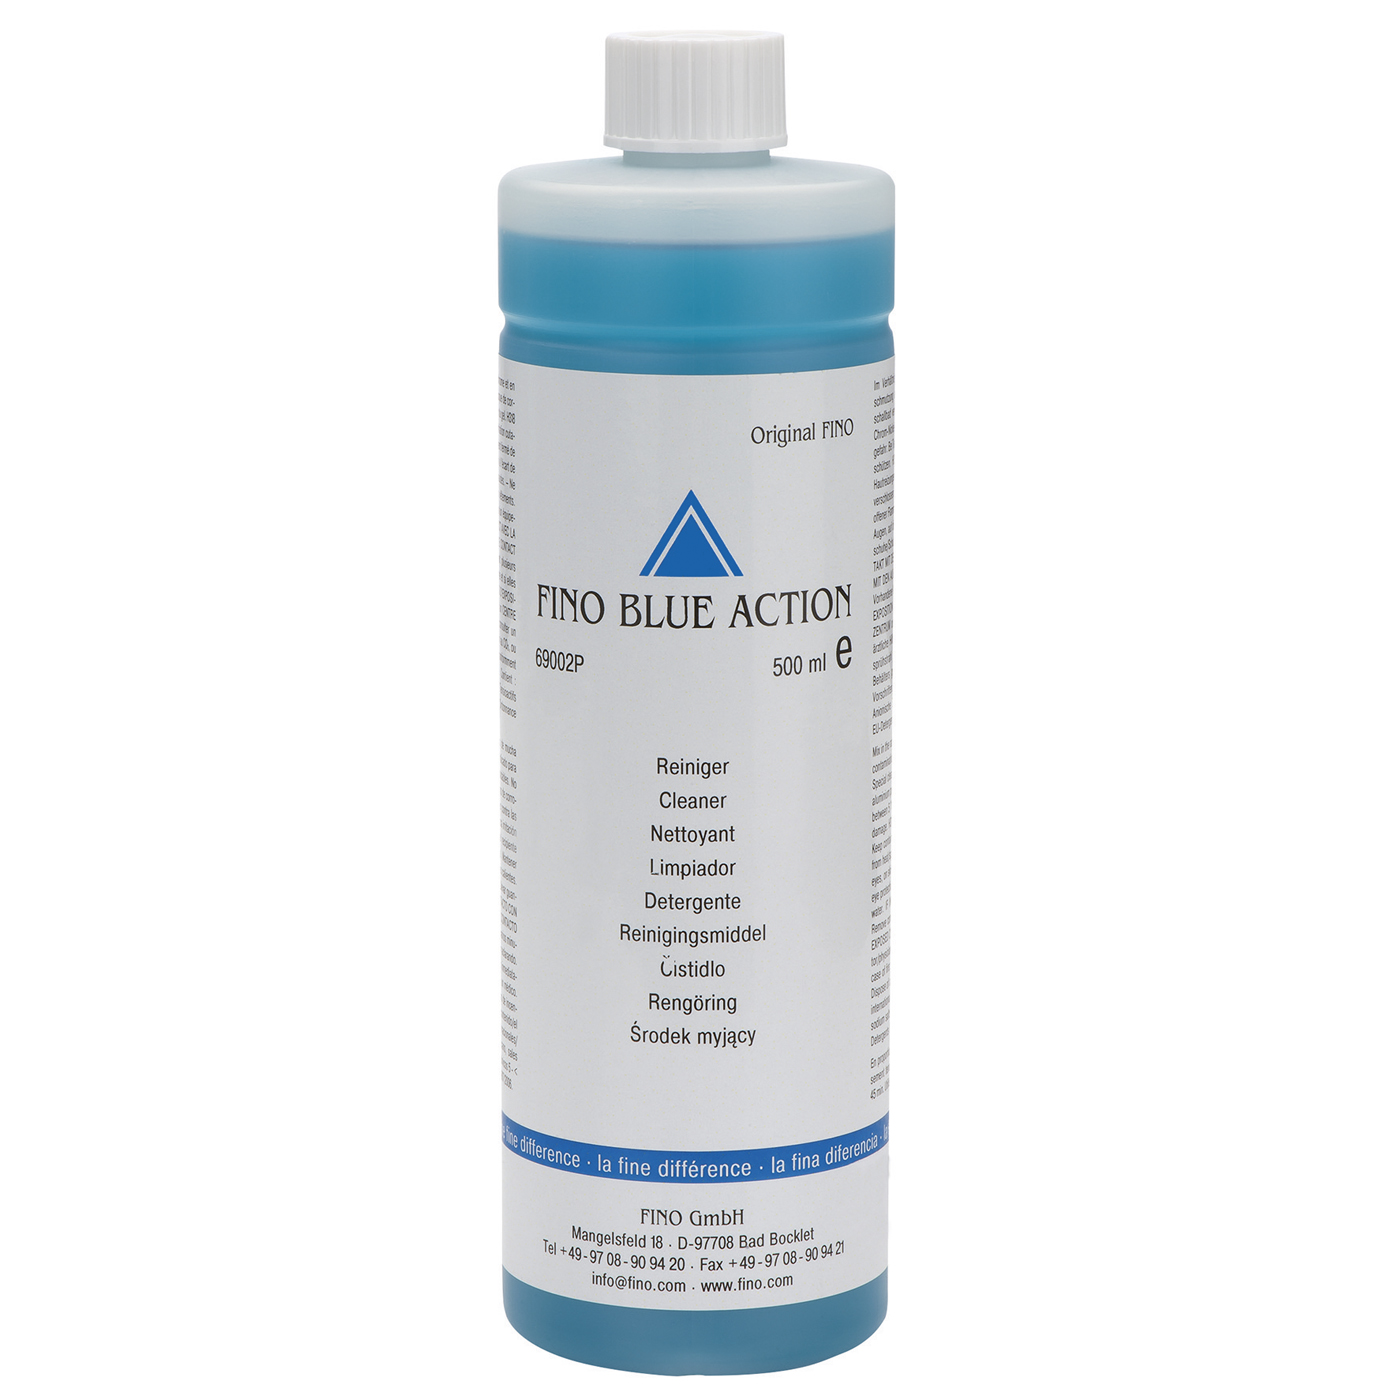 FINO BLUE ACTION Reiniger, Probepack - 500 ml